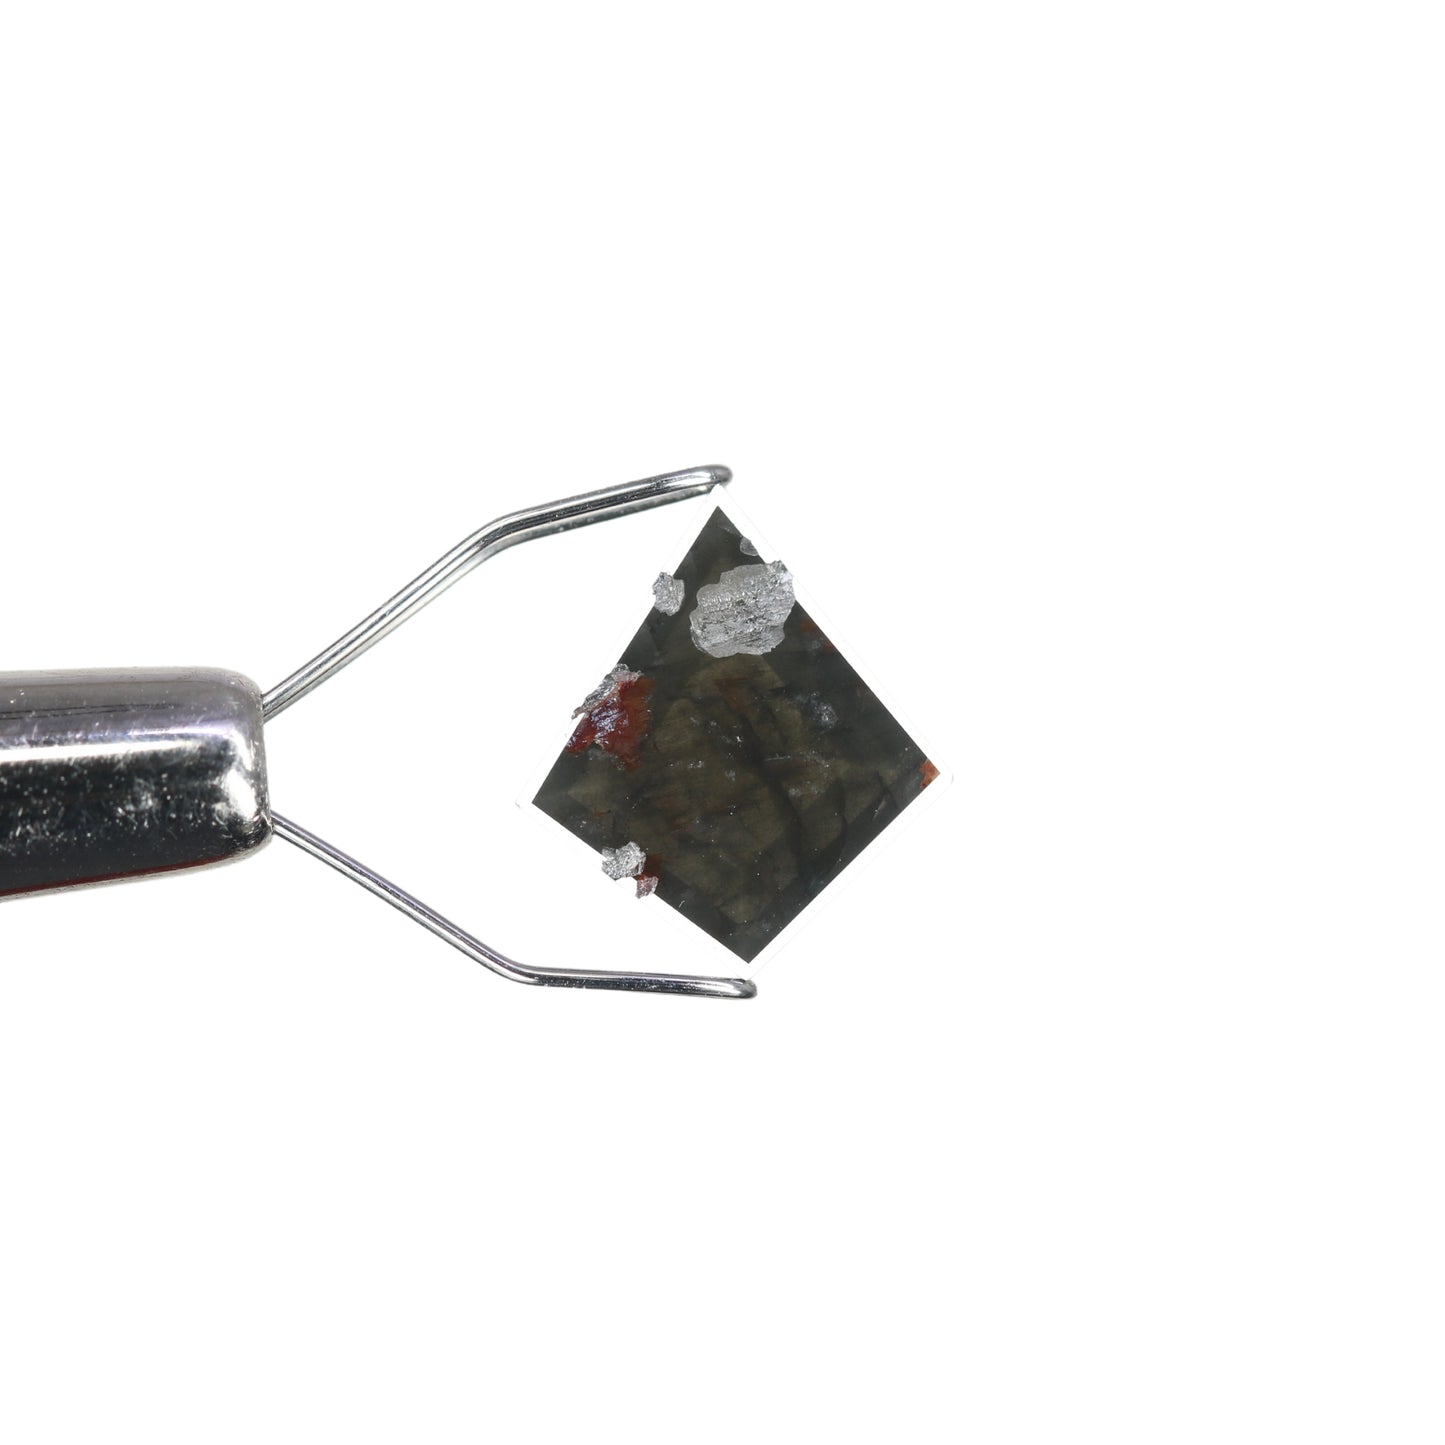 1.13 CT Kite Shape Salt And Pepper Diamond For Proposal Ring | Gift For Girl Friend